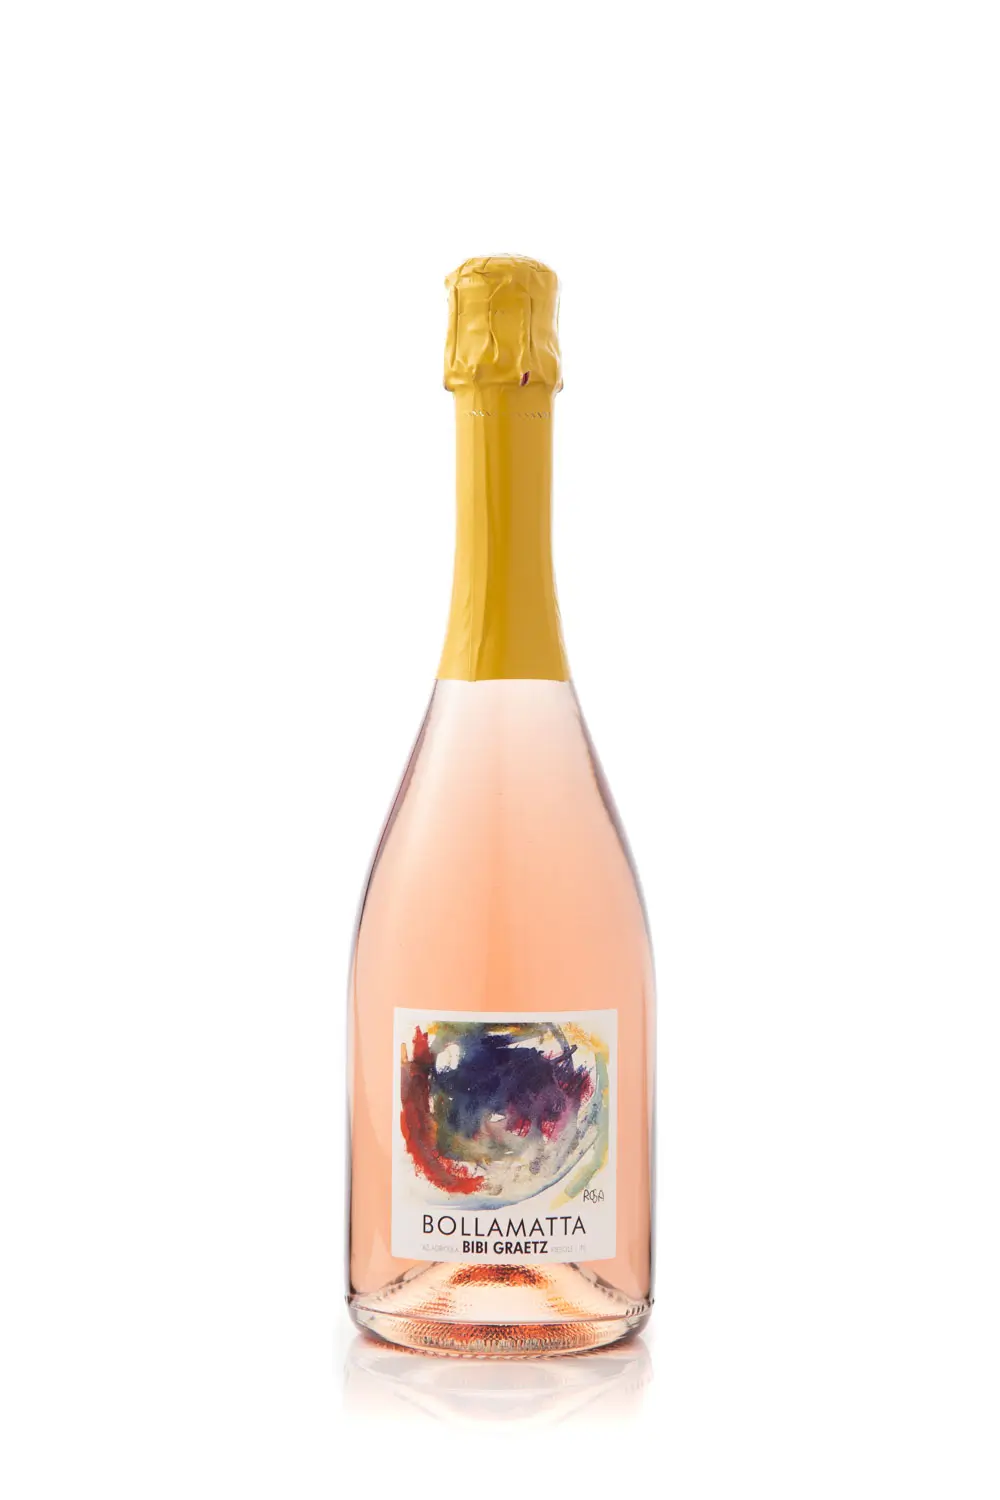 A bottle of rose wine